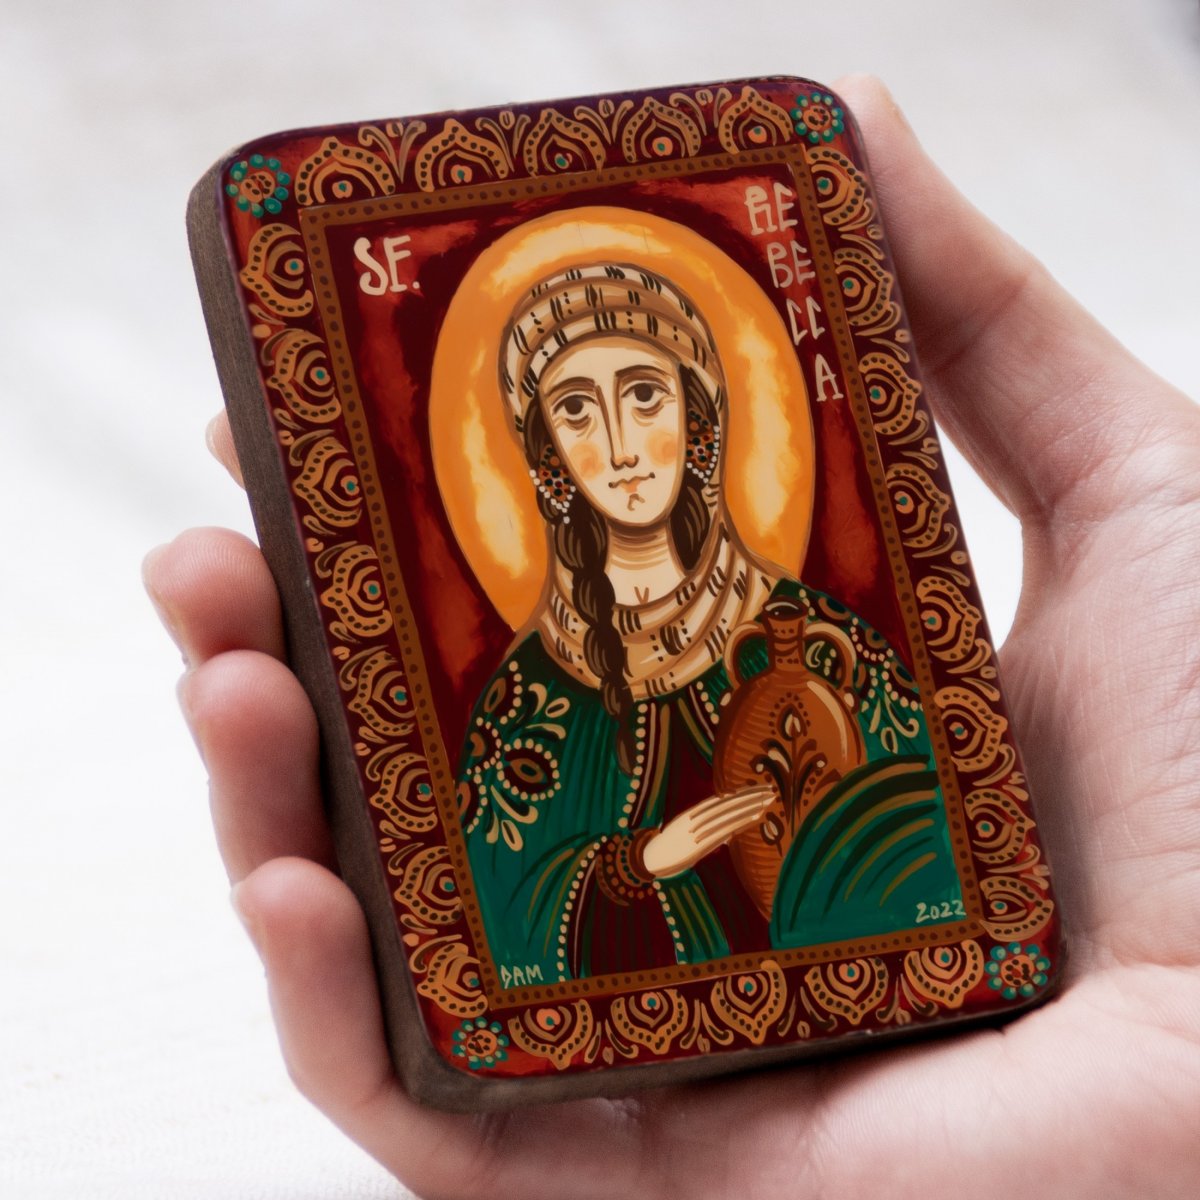 Wood icon, "Saint Rebecca", miniature, 7x10cm